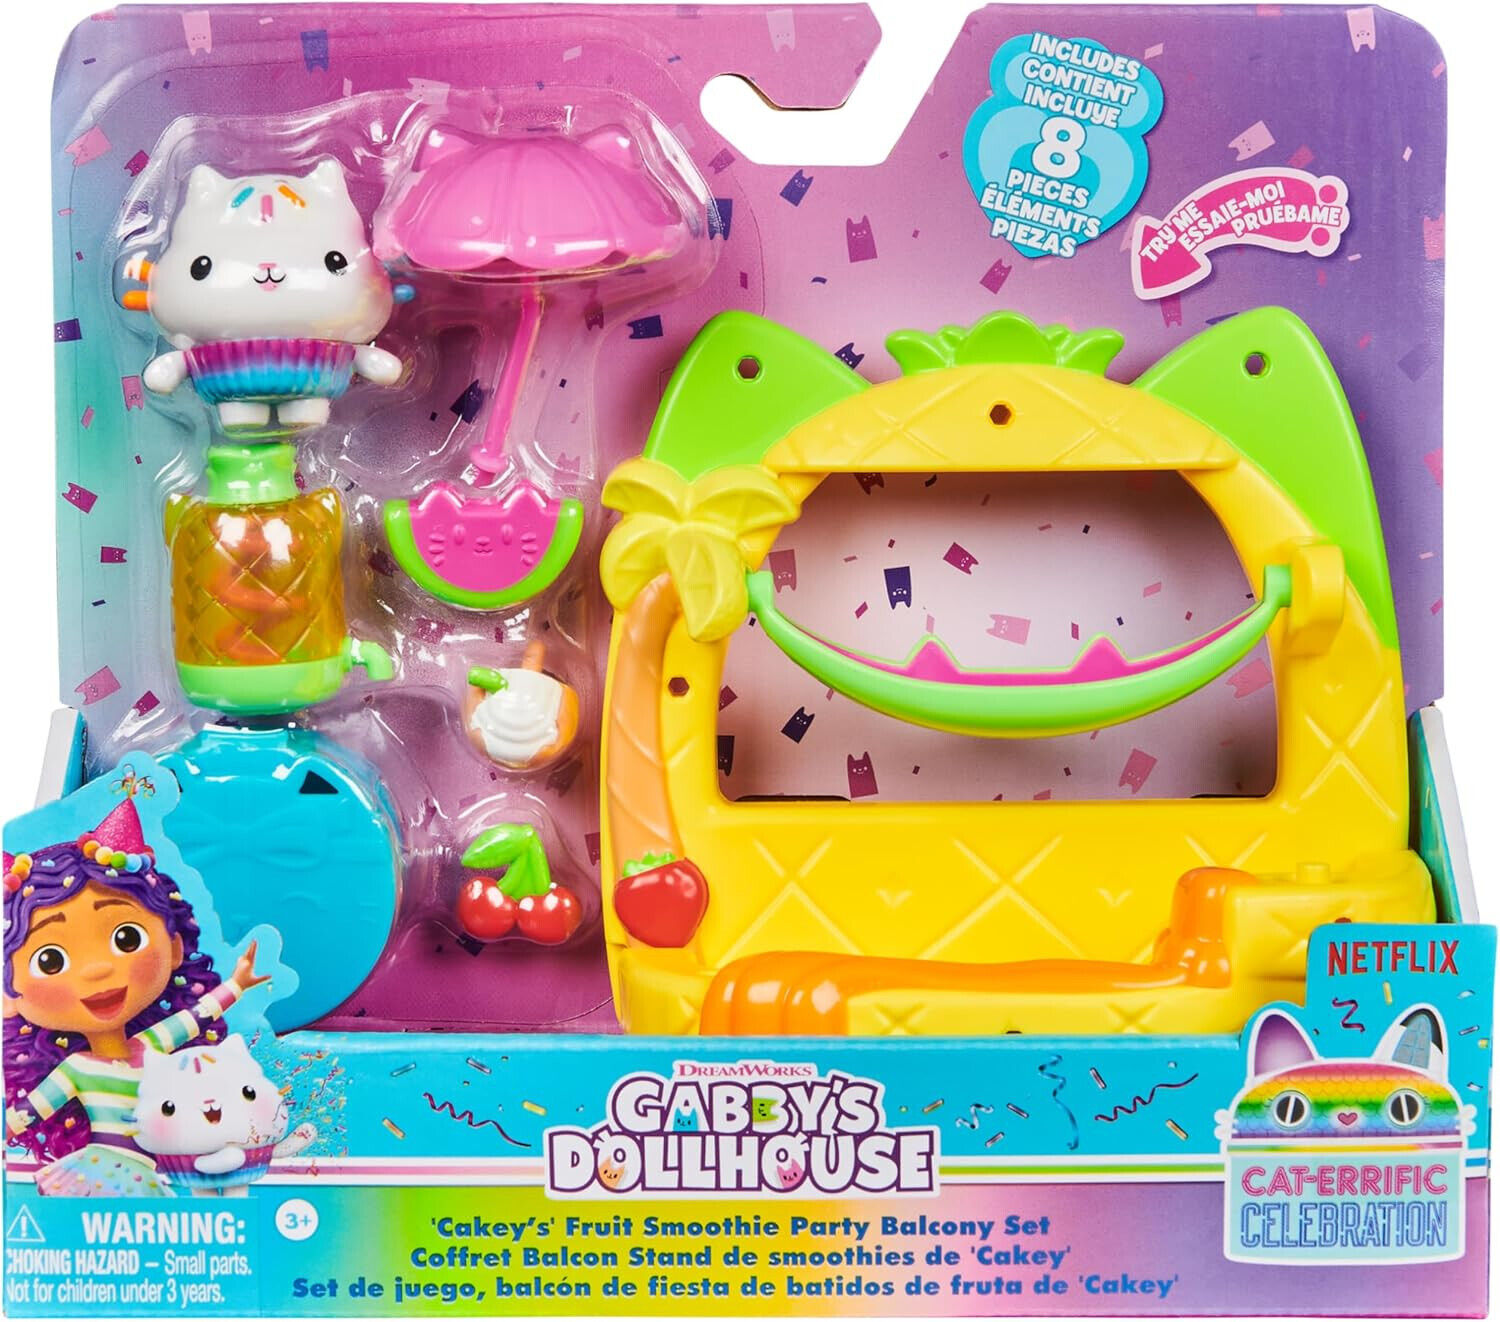 Gabby's Dollhouse - 'Cakey's' Fruit Smoothie Party Balcony Set, Playset, 8-Pcs